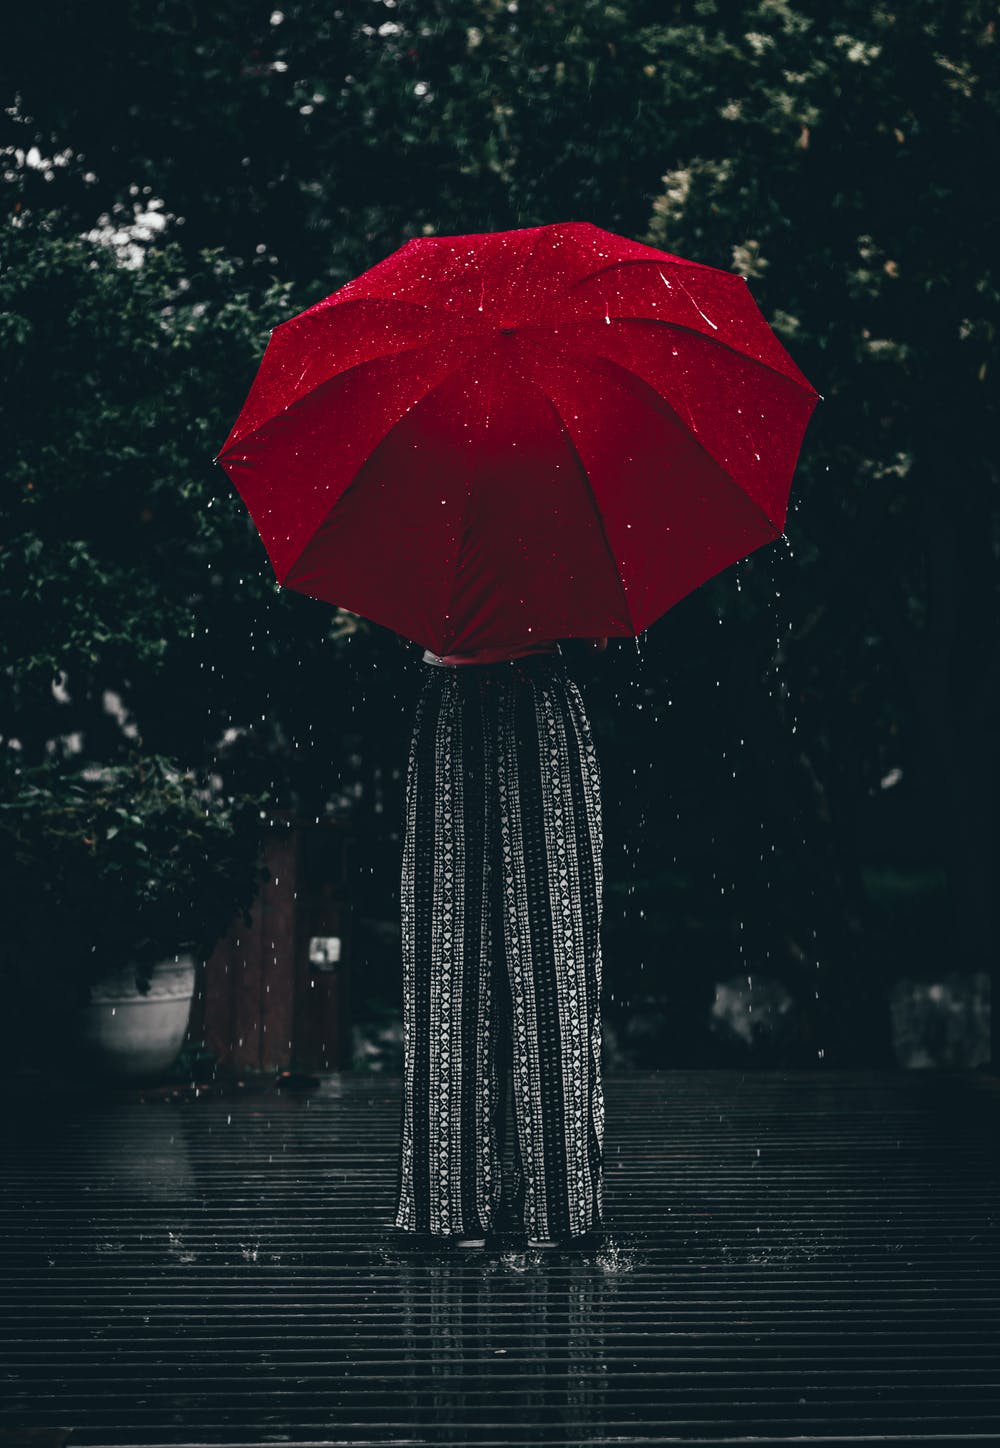 Best Rain Photo · 100% Free Downloads